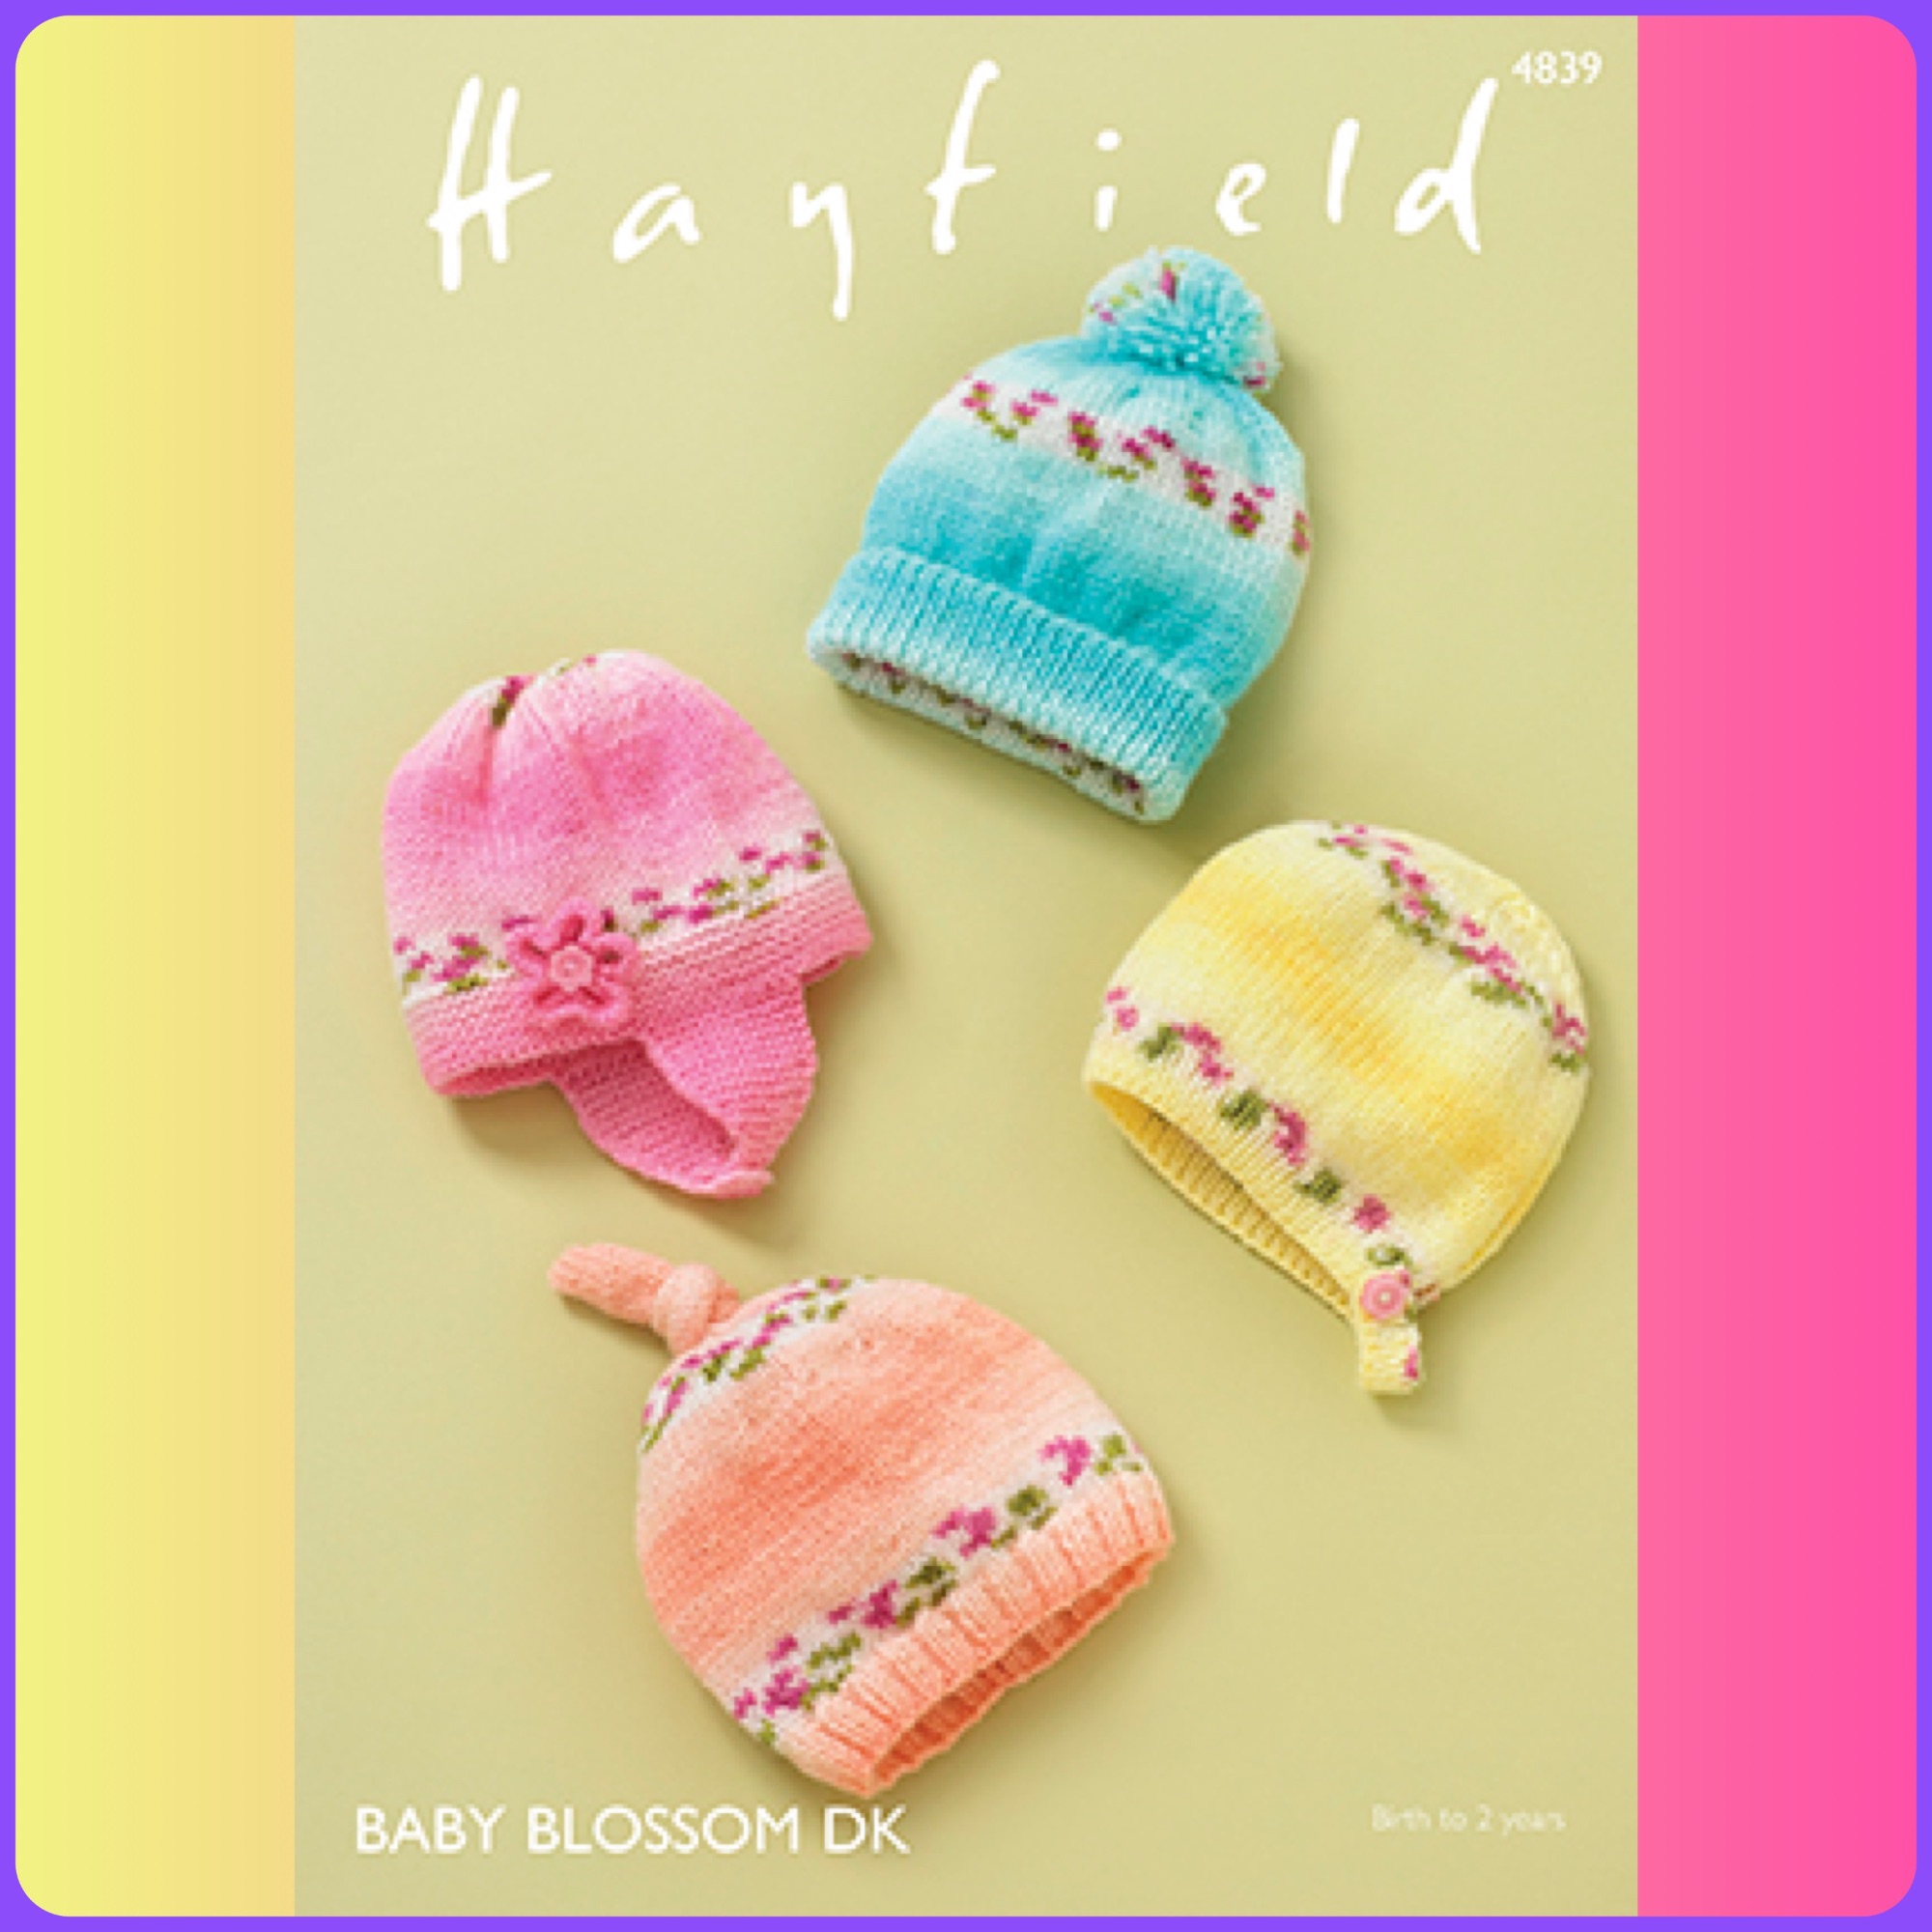 Hayfield baby blossom dk pattern 4839 baby hats